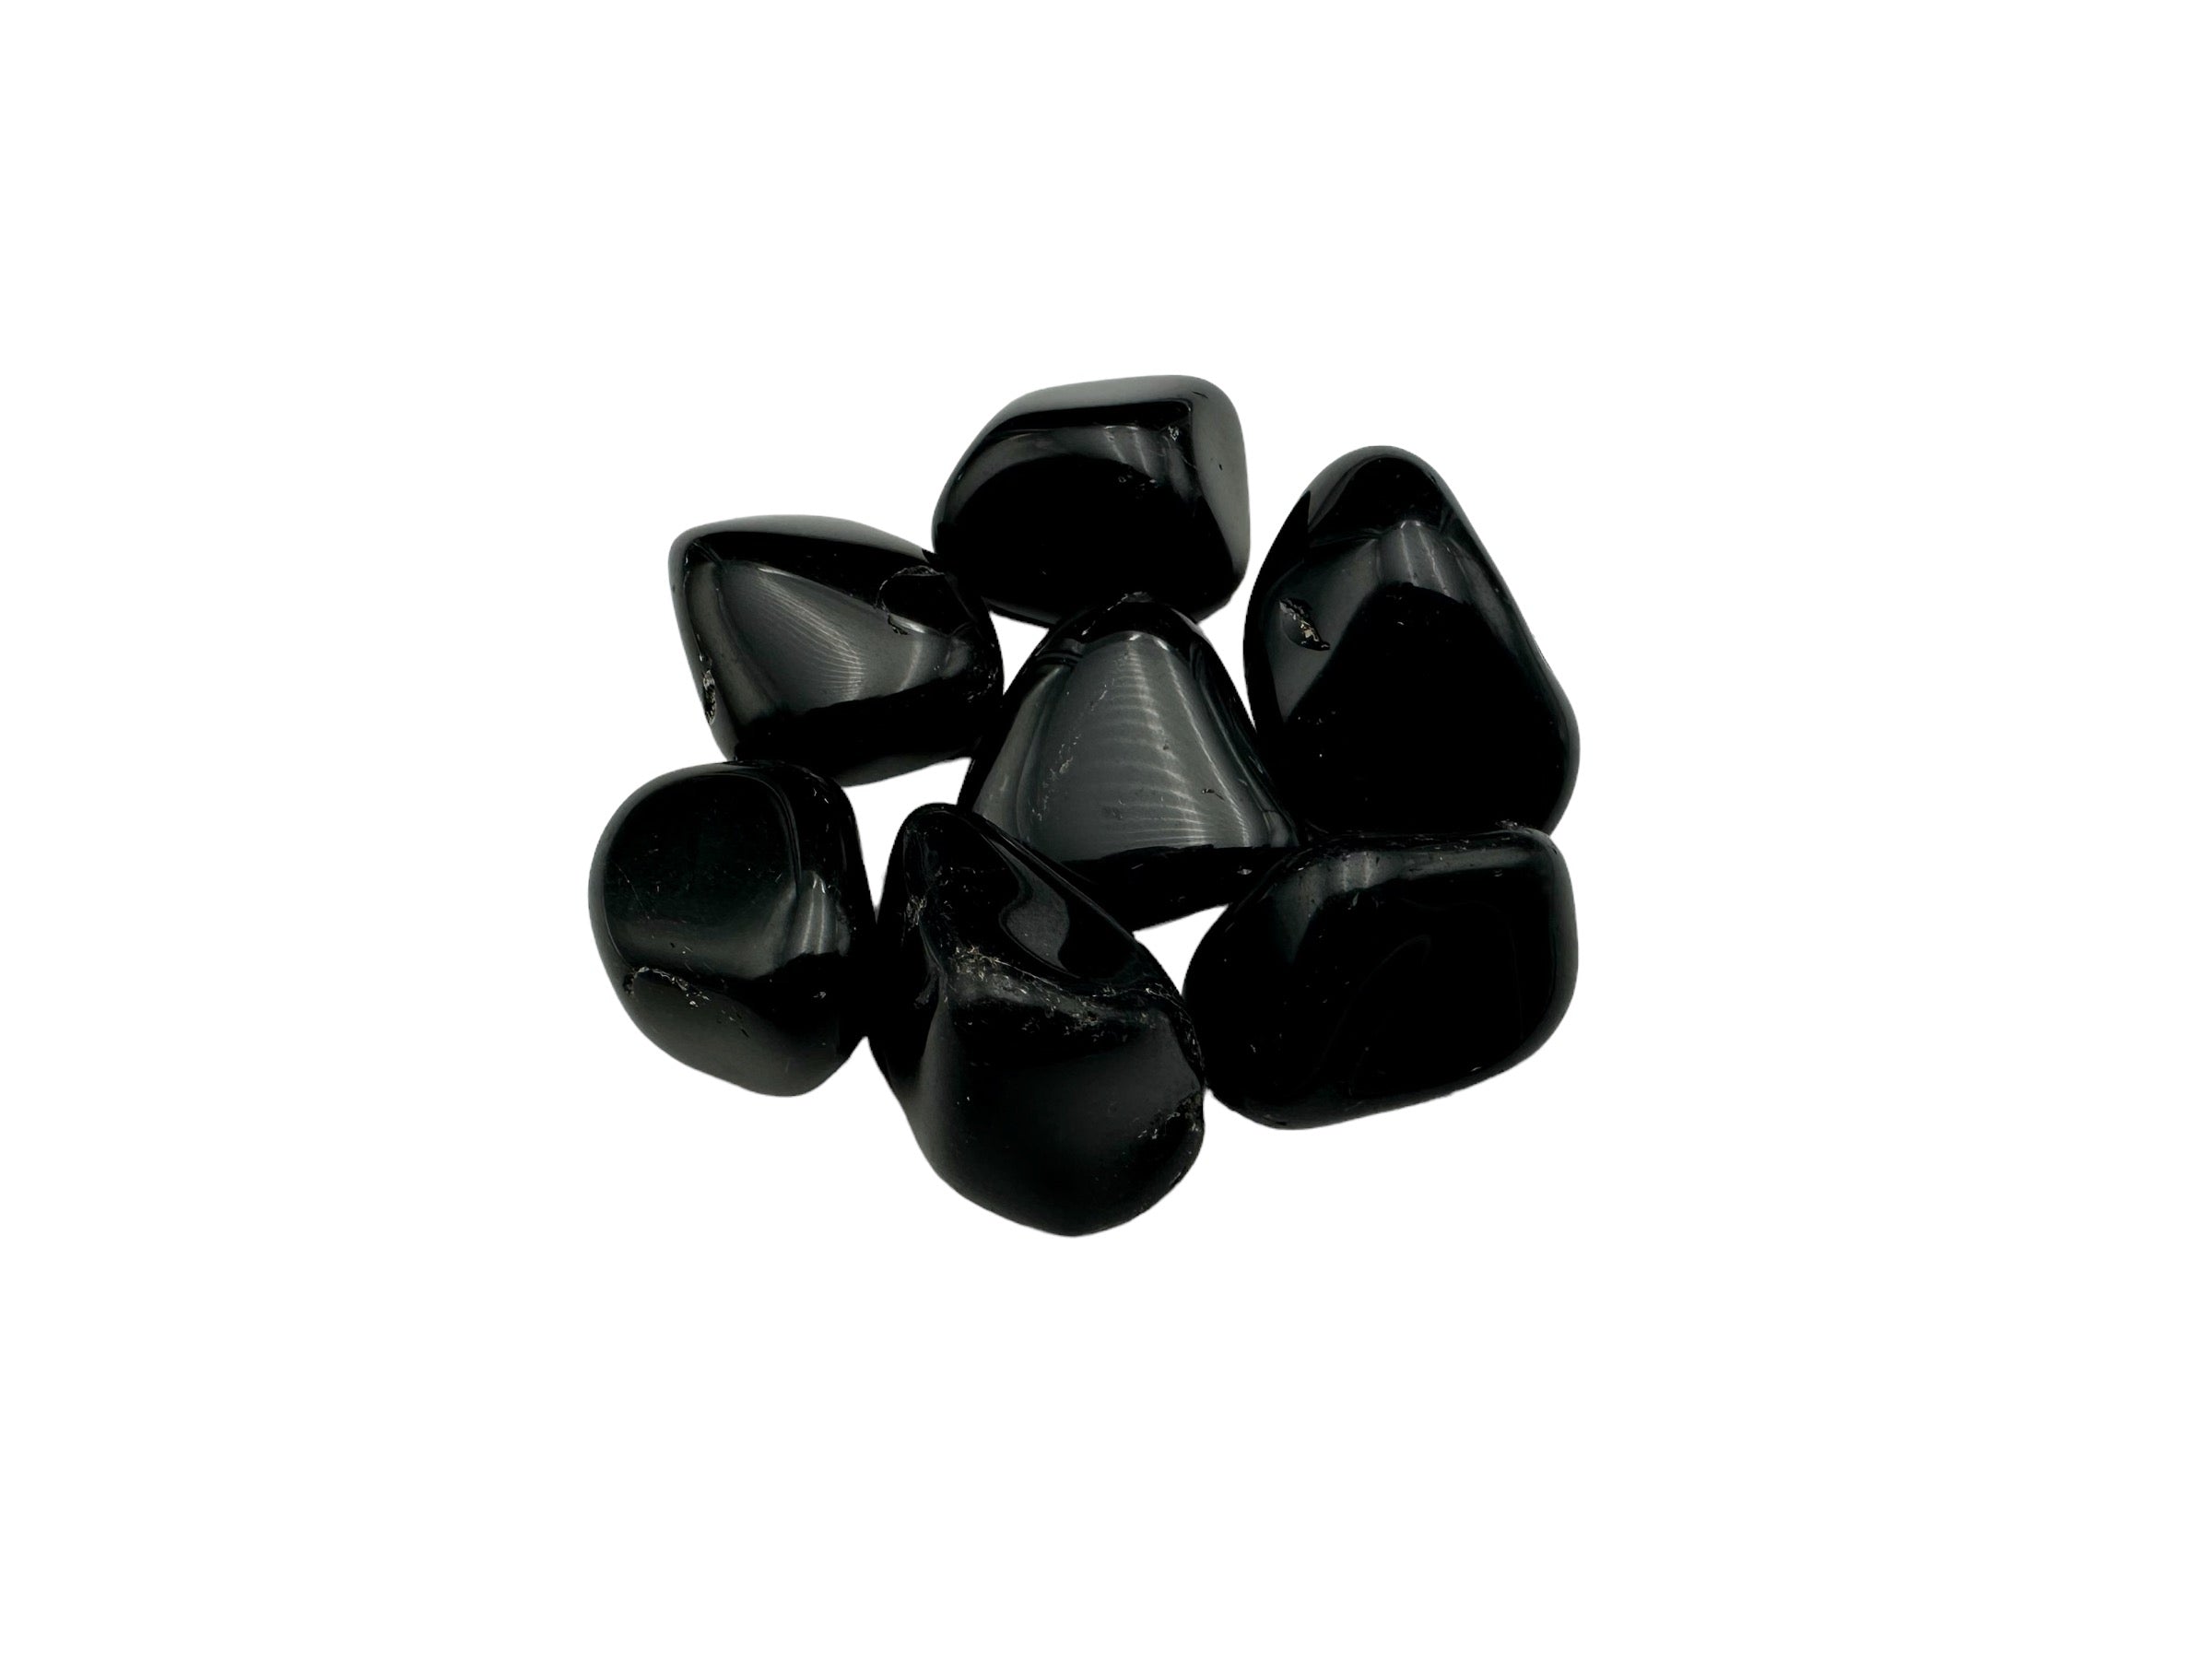 Obsidian Tumbles